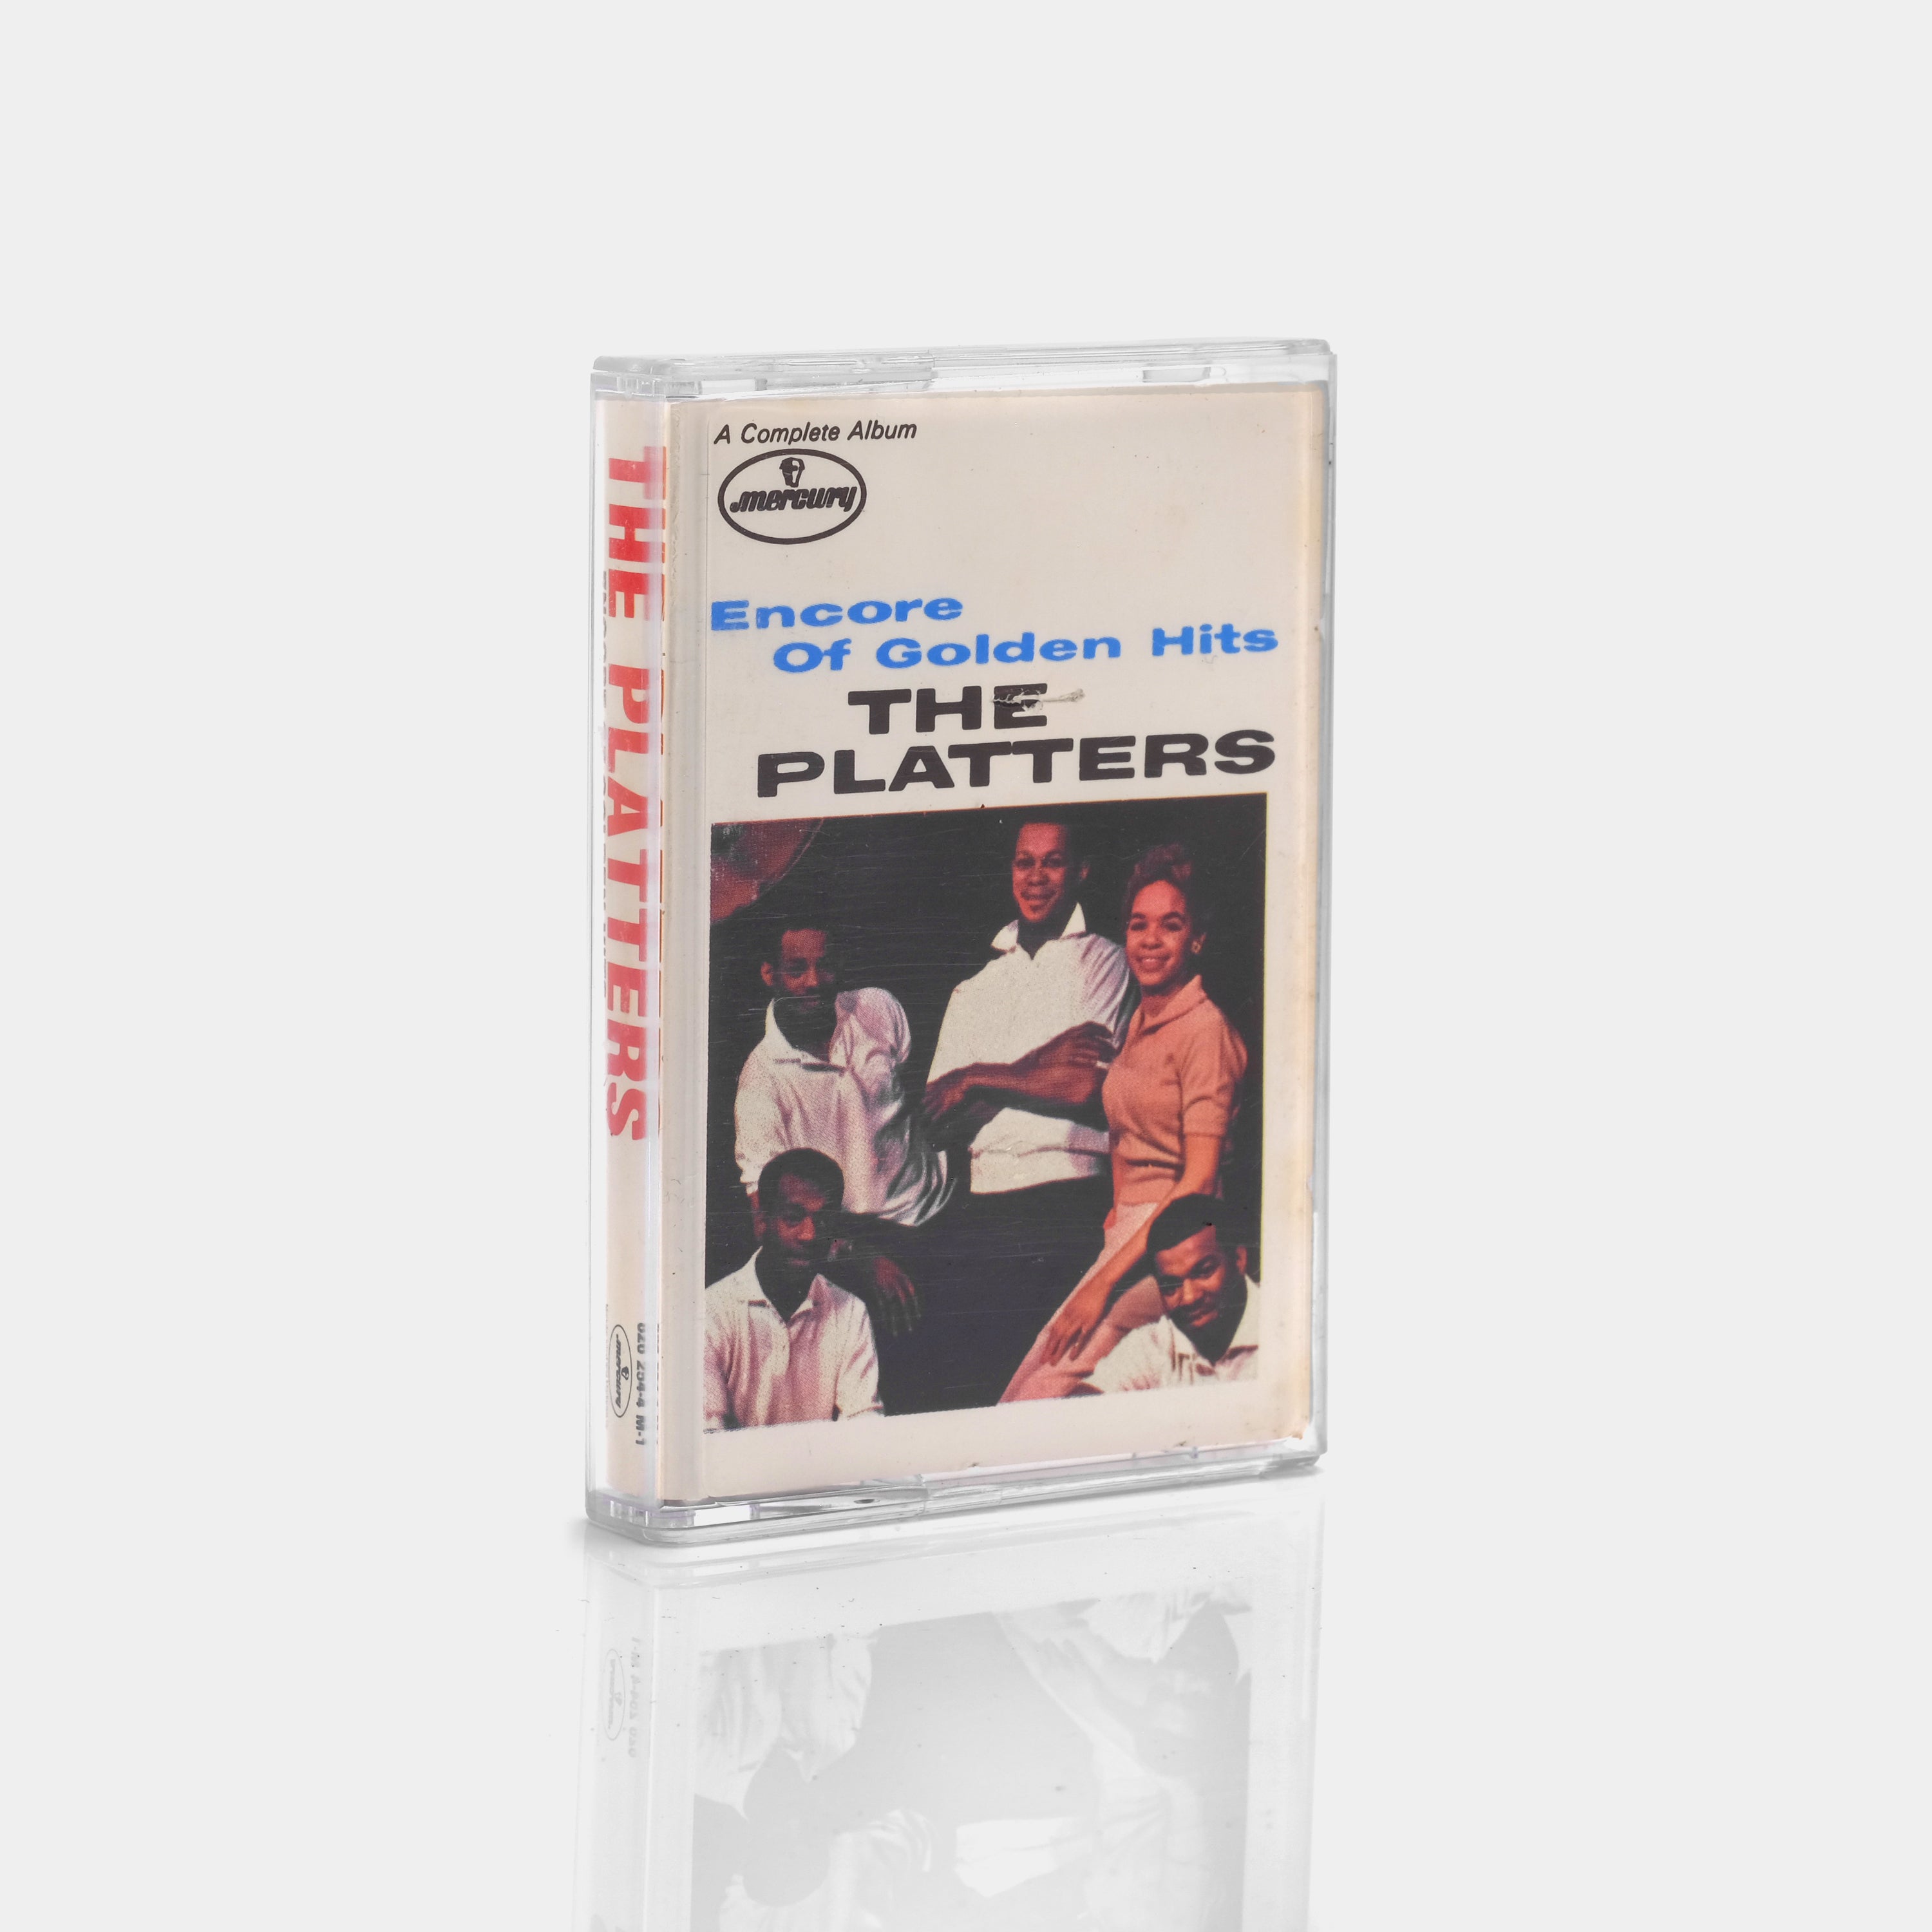 The Platters - Encore Of Golden Hits Cassette Tape